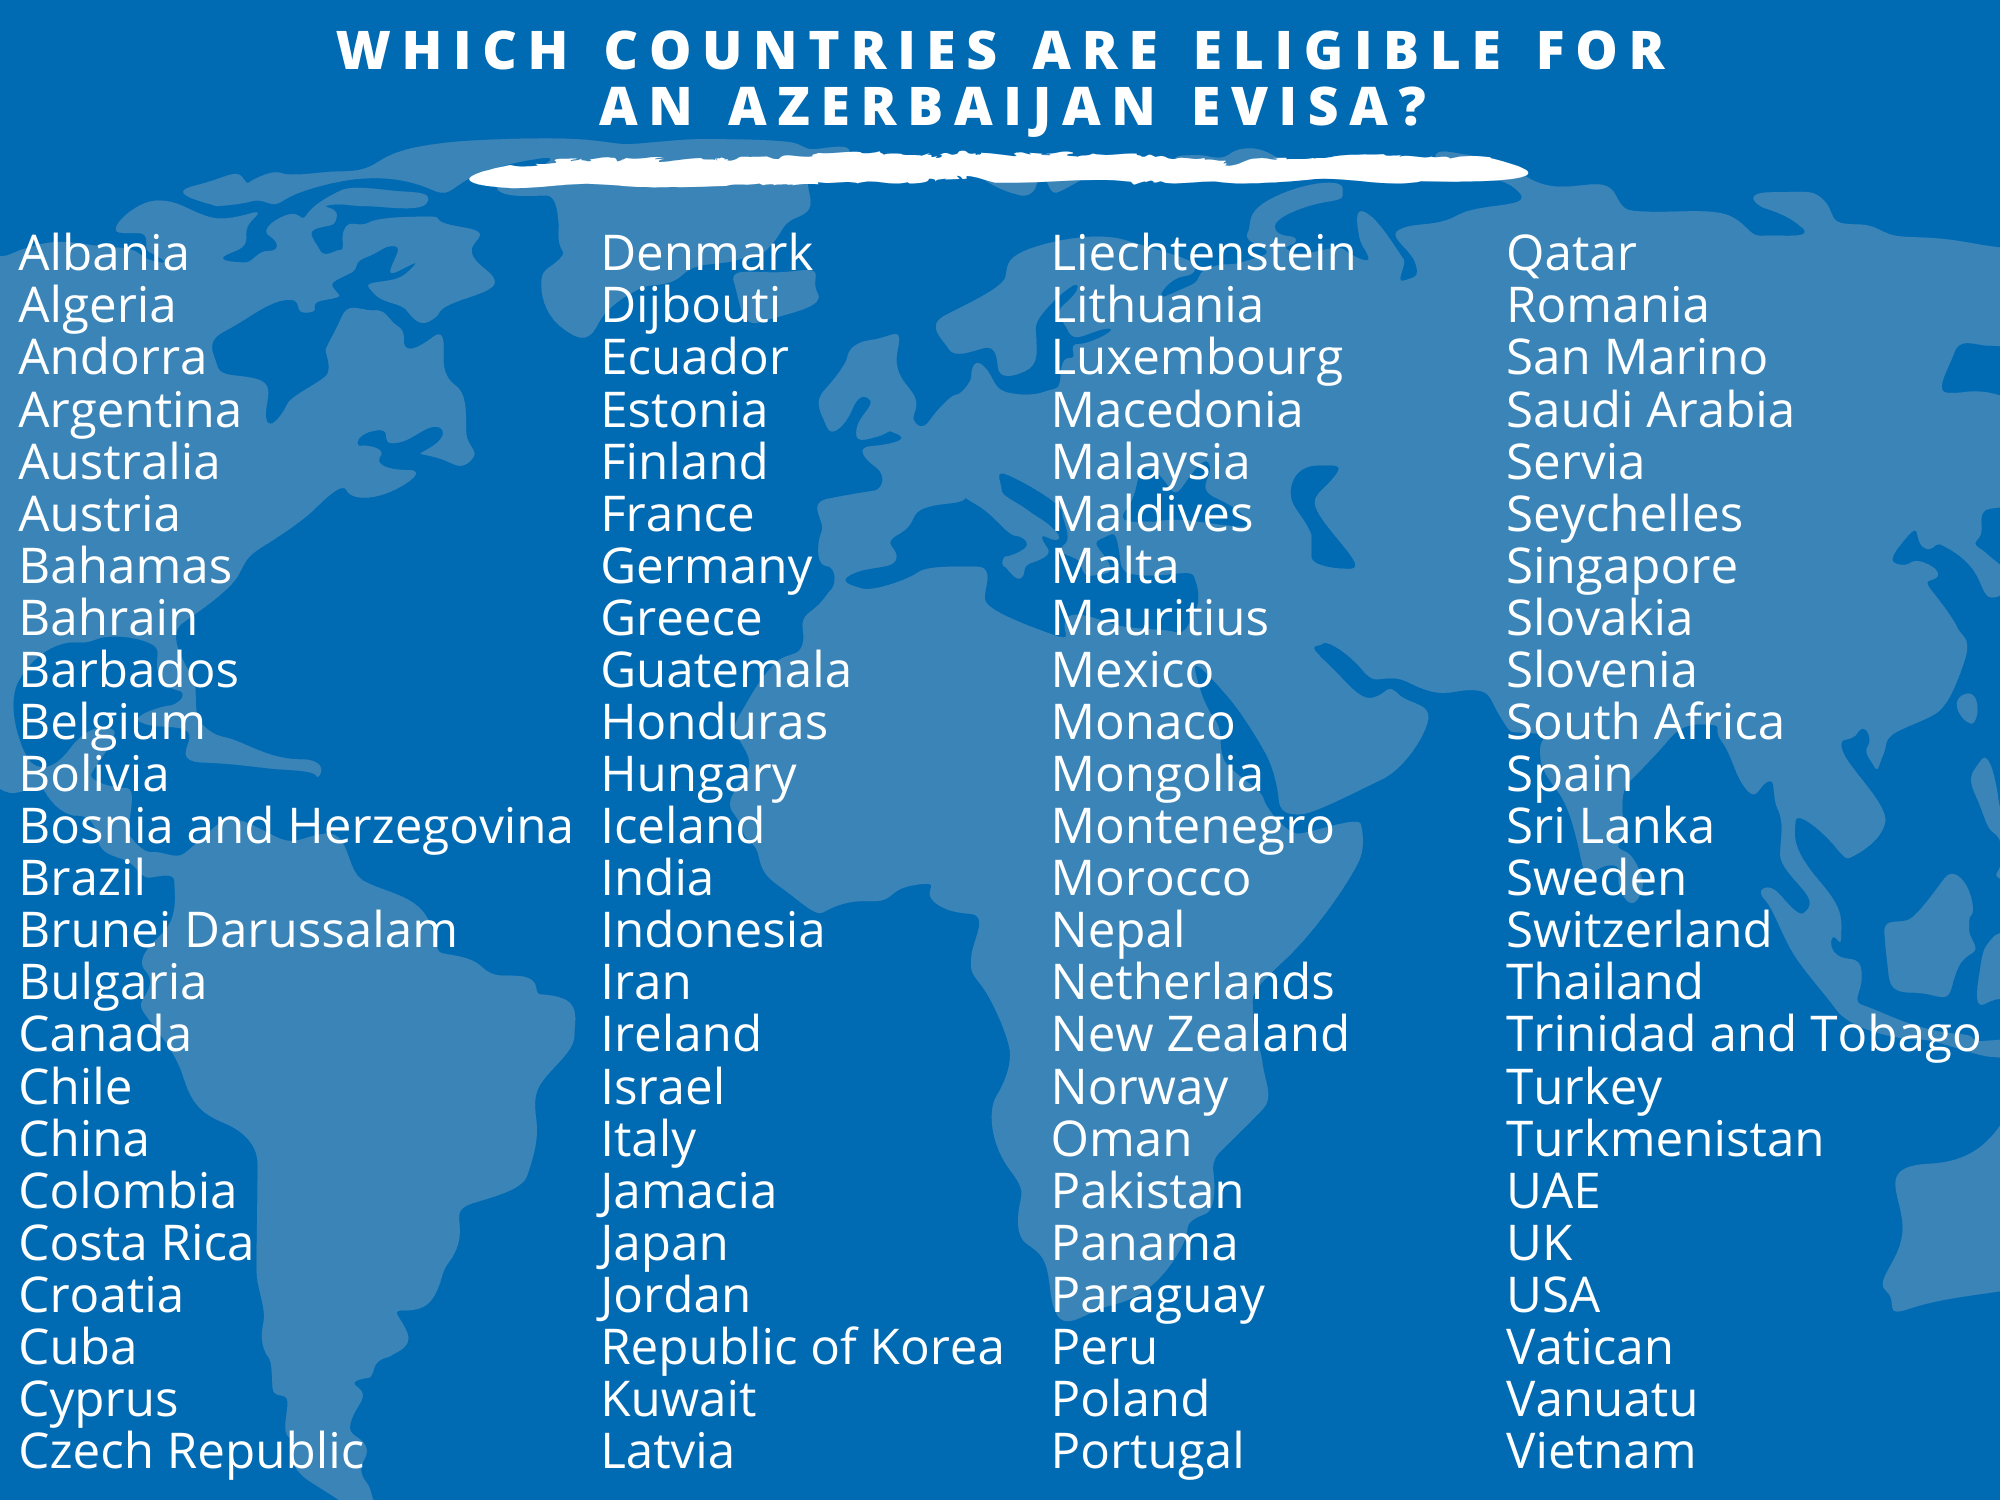 Azerbaijan eVisa eligible countries list